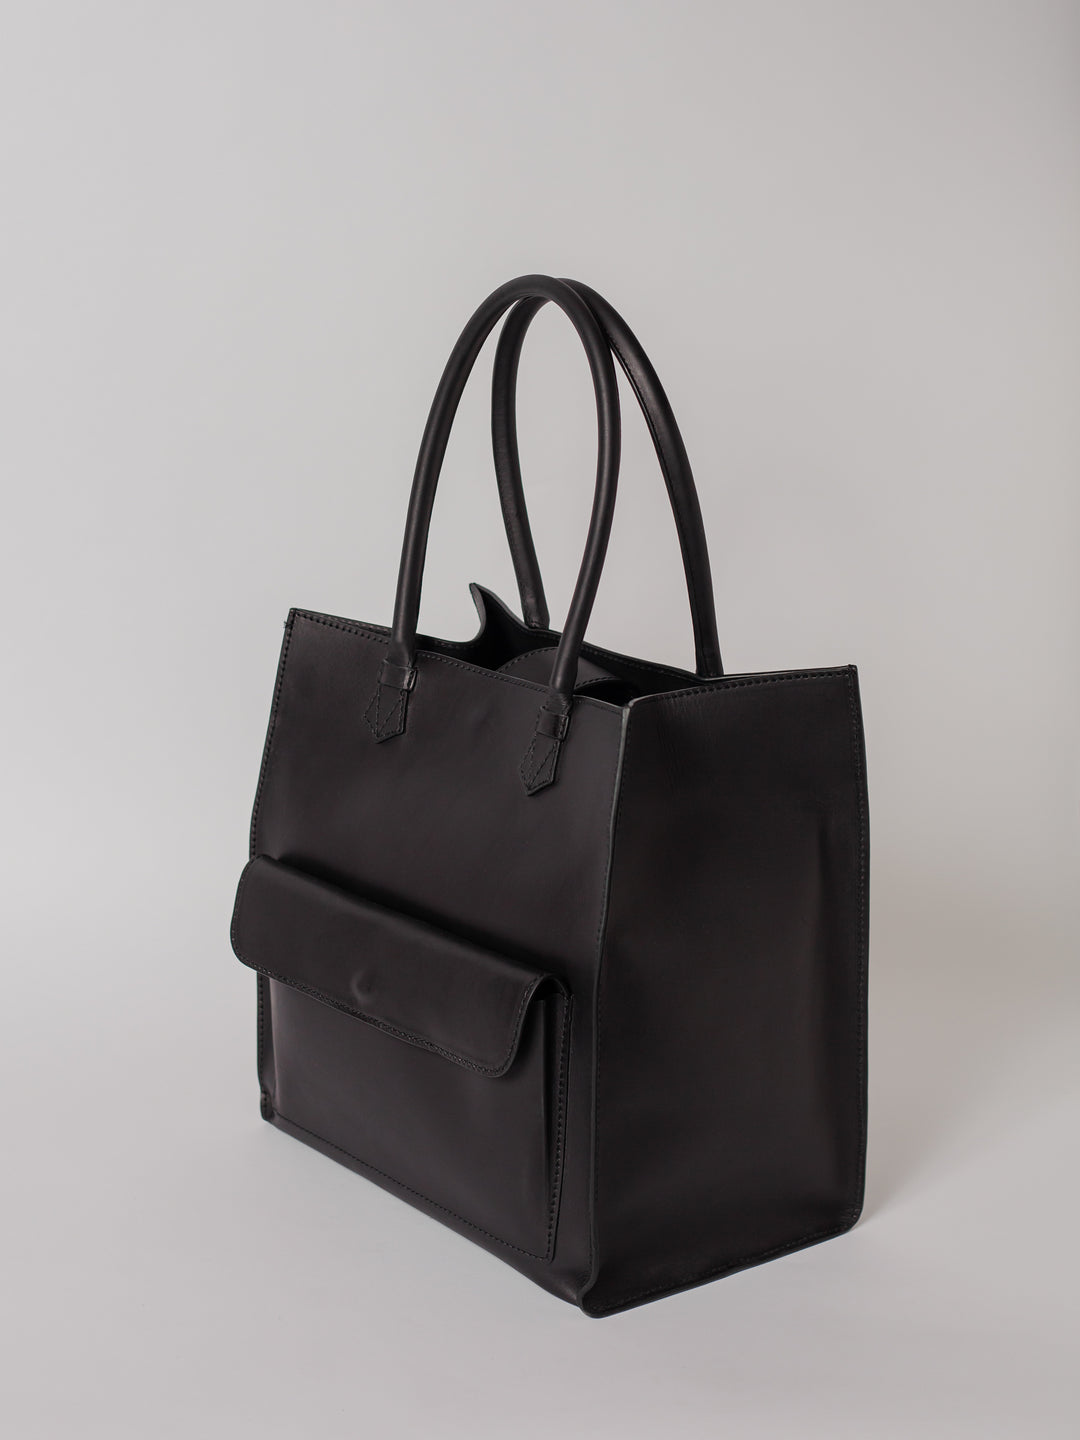 Blankens The Martha Travel black leather bag weekend bag